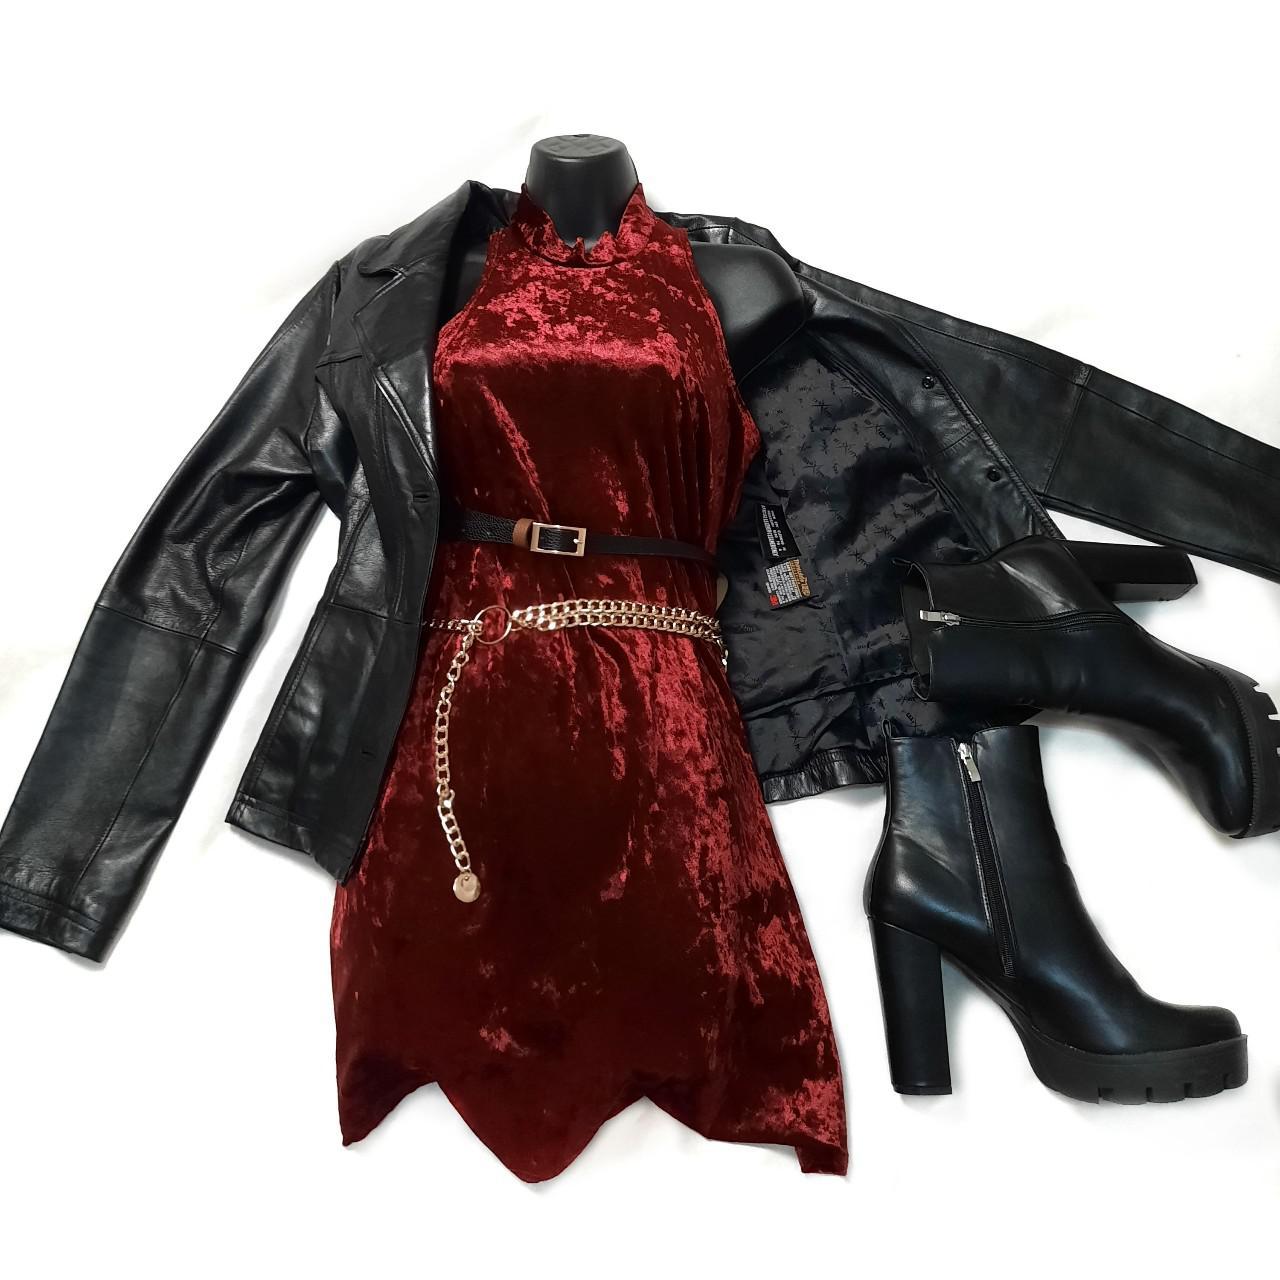 Product Image 2 - Fall Favorites
*
Red velvet dress, size